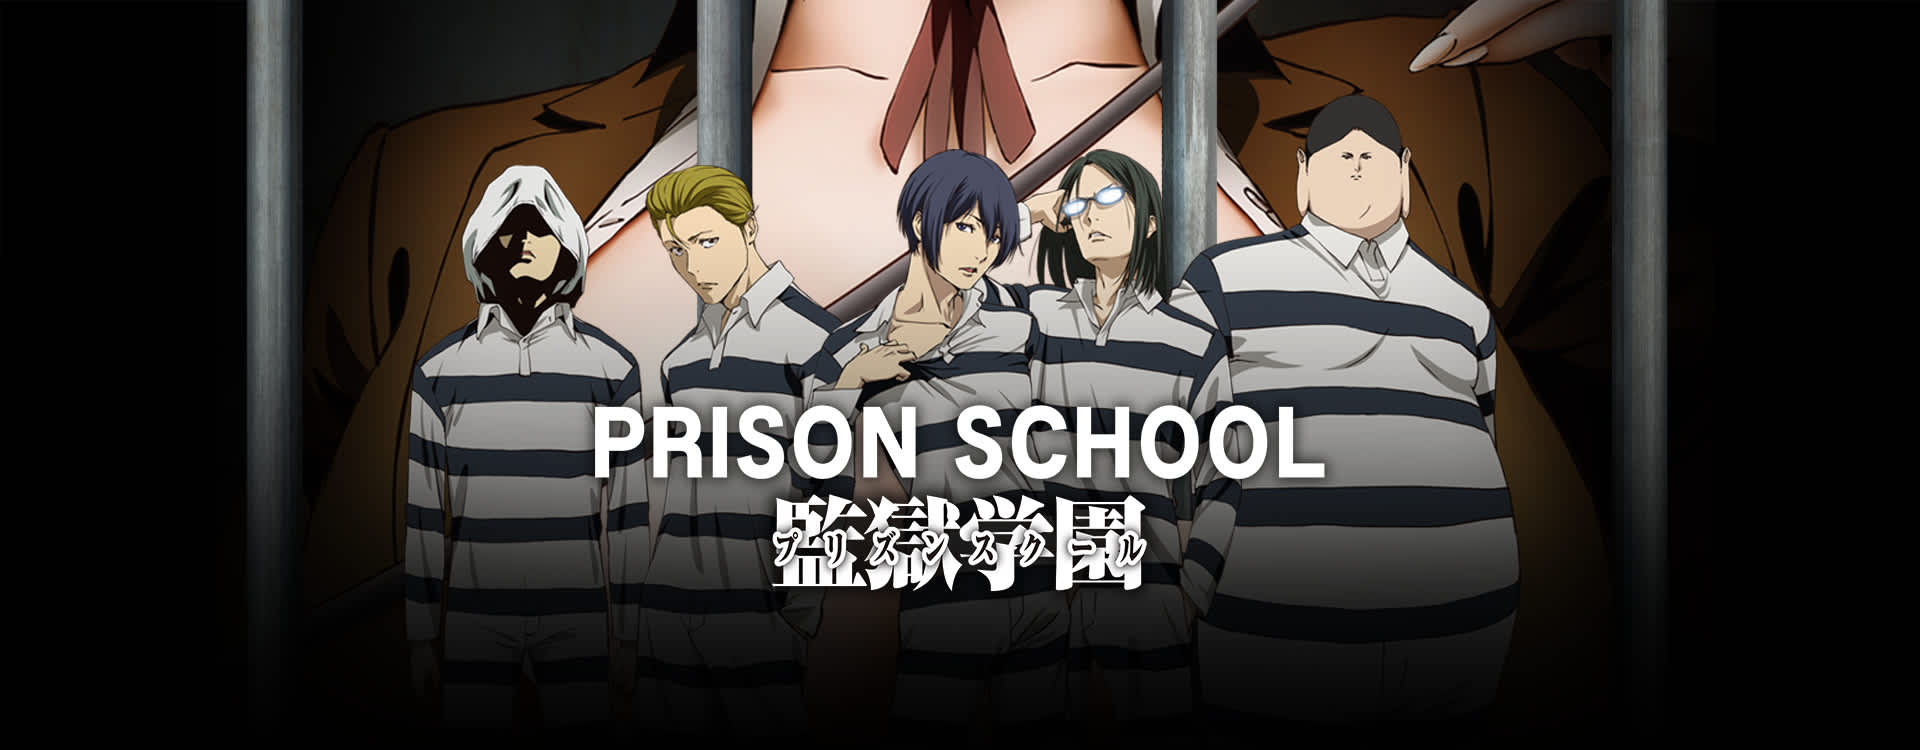 uol anime prison school season 2 ep 1